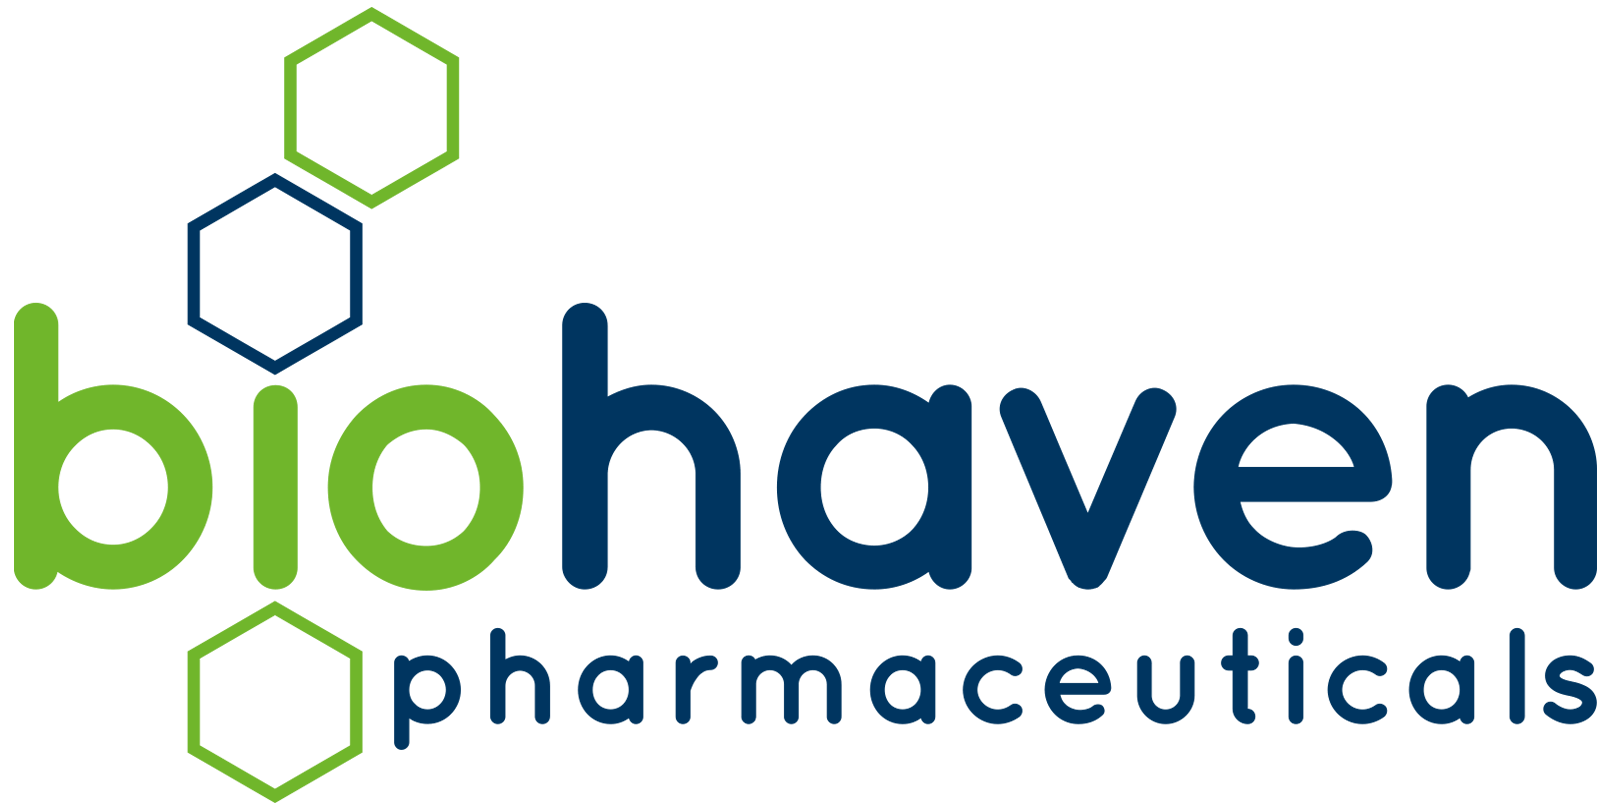 Biohaven-logo-png-1.png